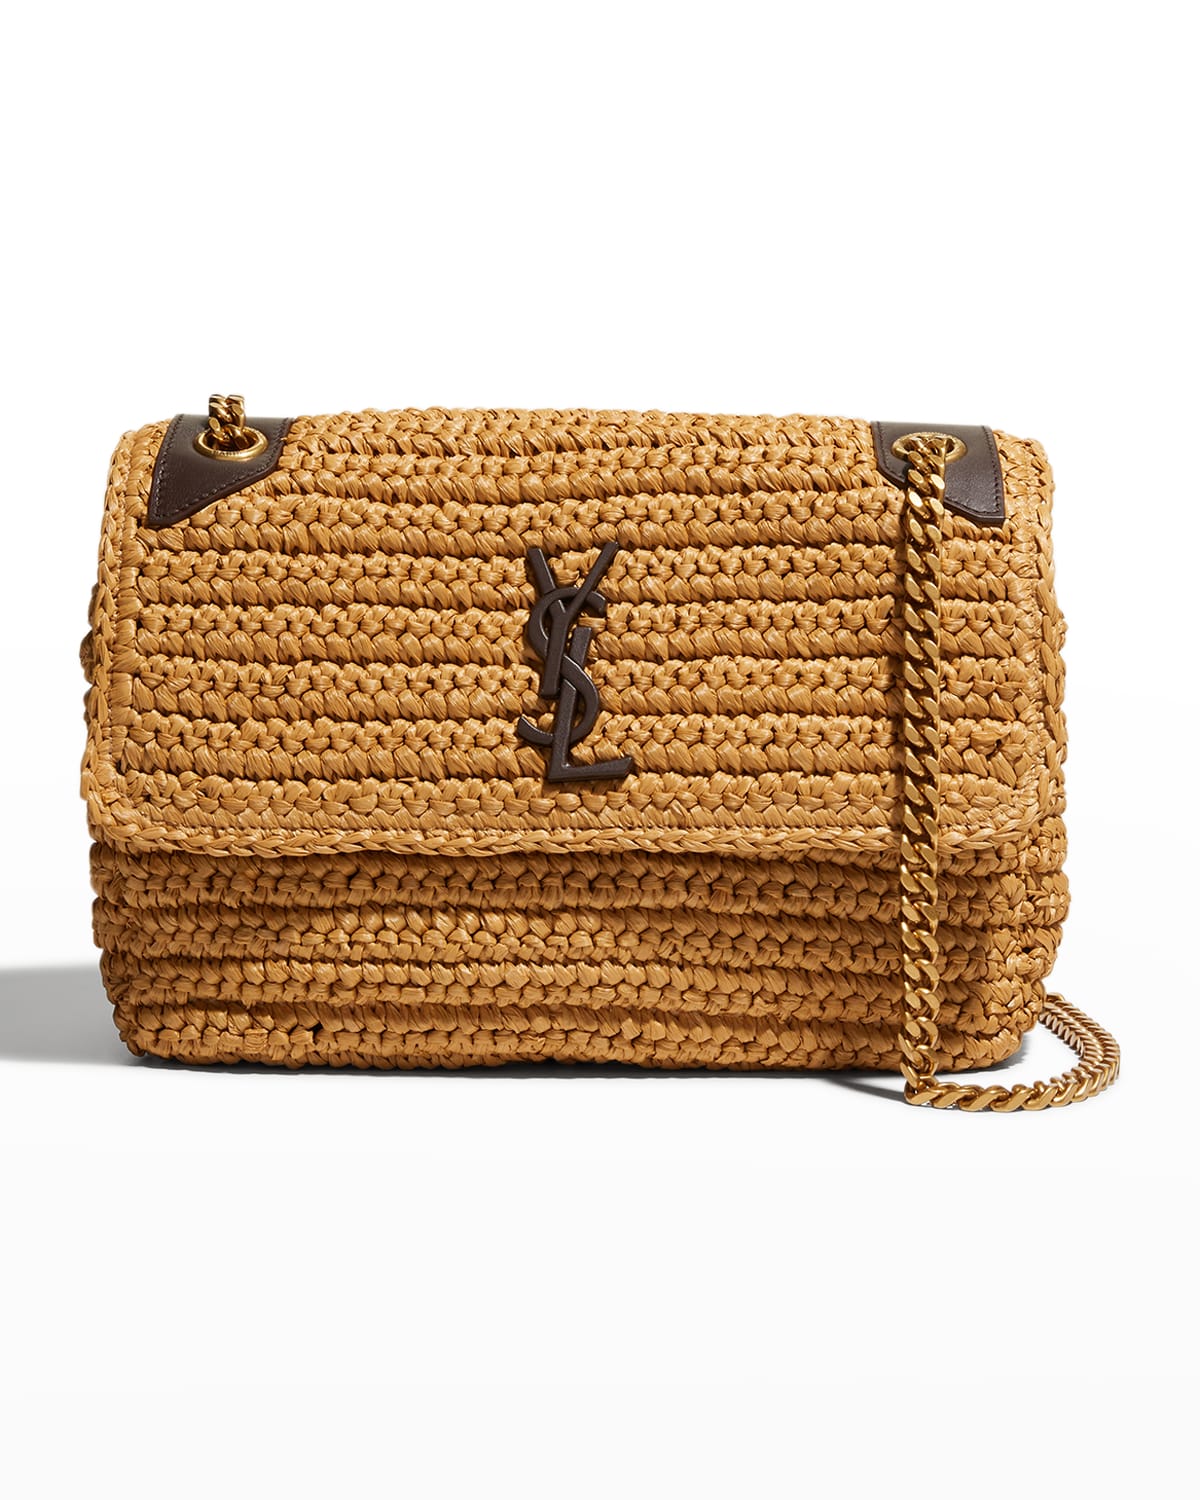 Saint Laurent Niki Ysl Monogram Medium Crocheted Shoulder Bag In Naturale New Nut